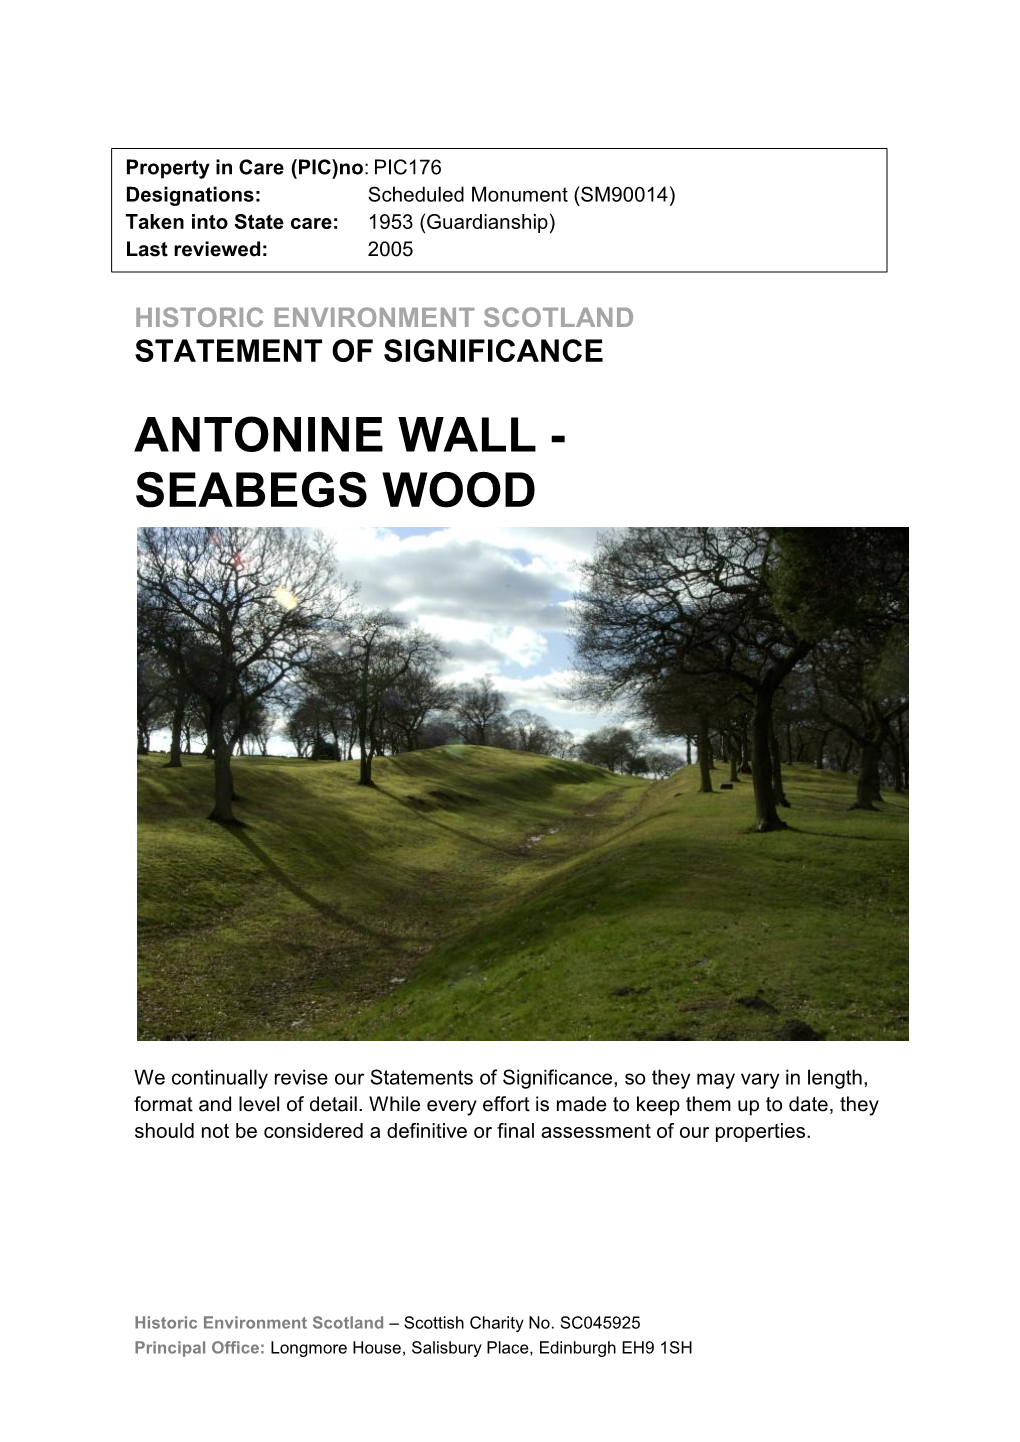 Antonine Wall - Seabegs Wood